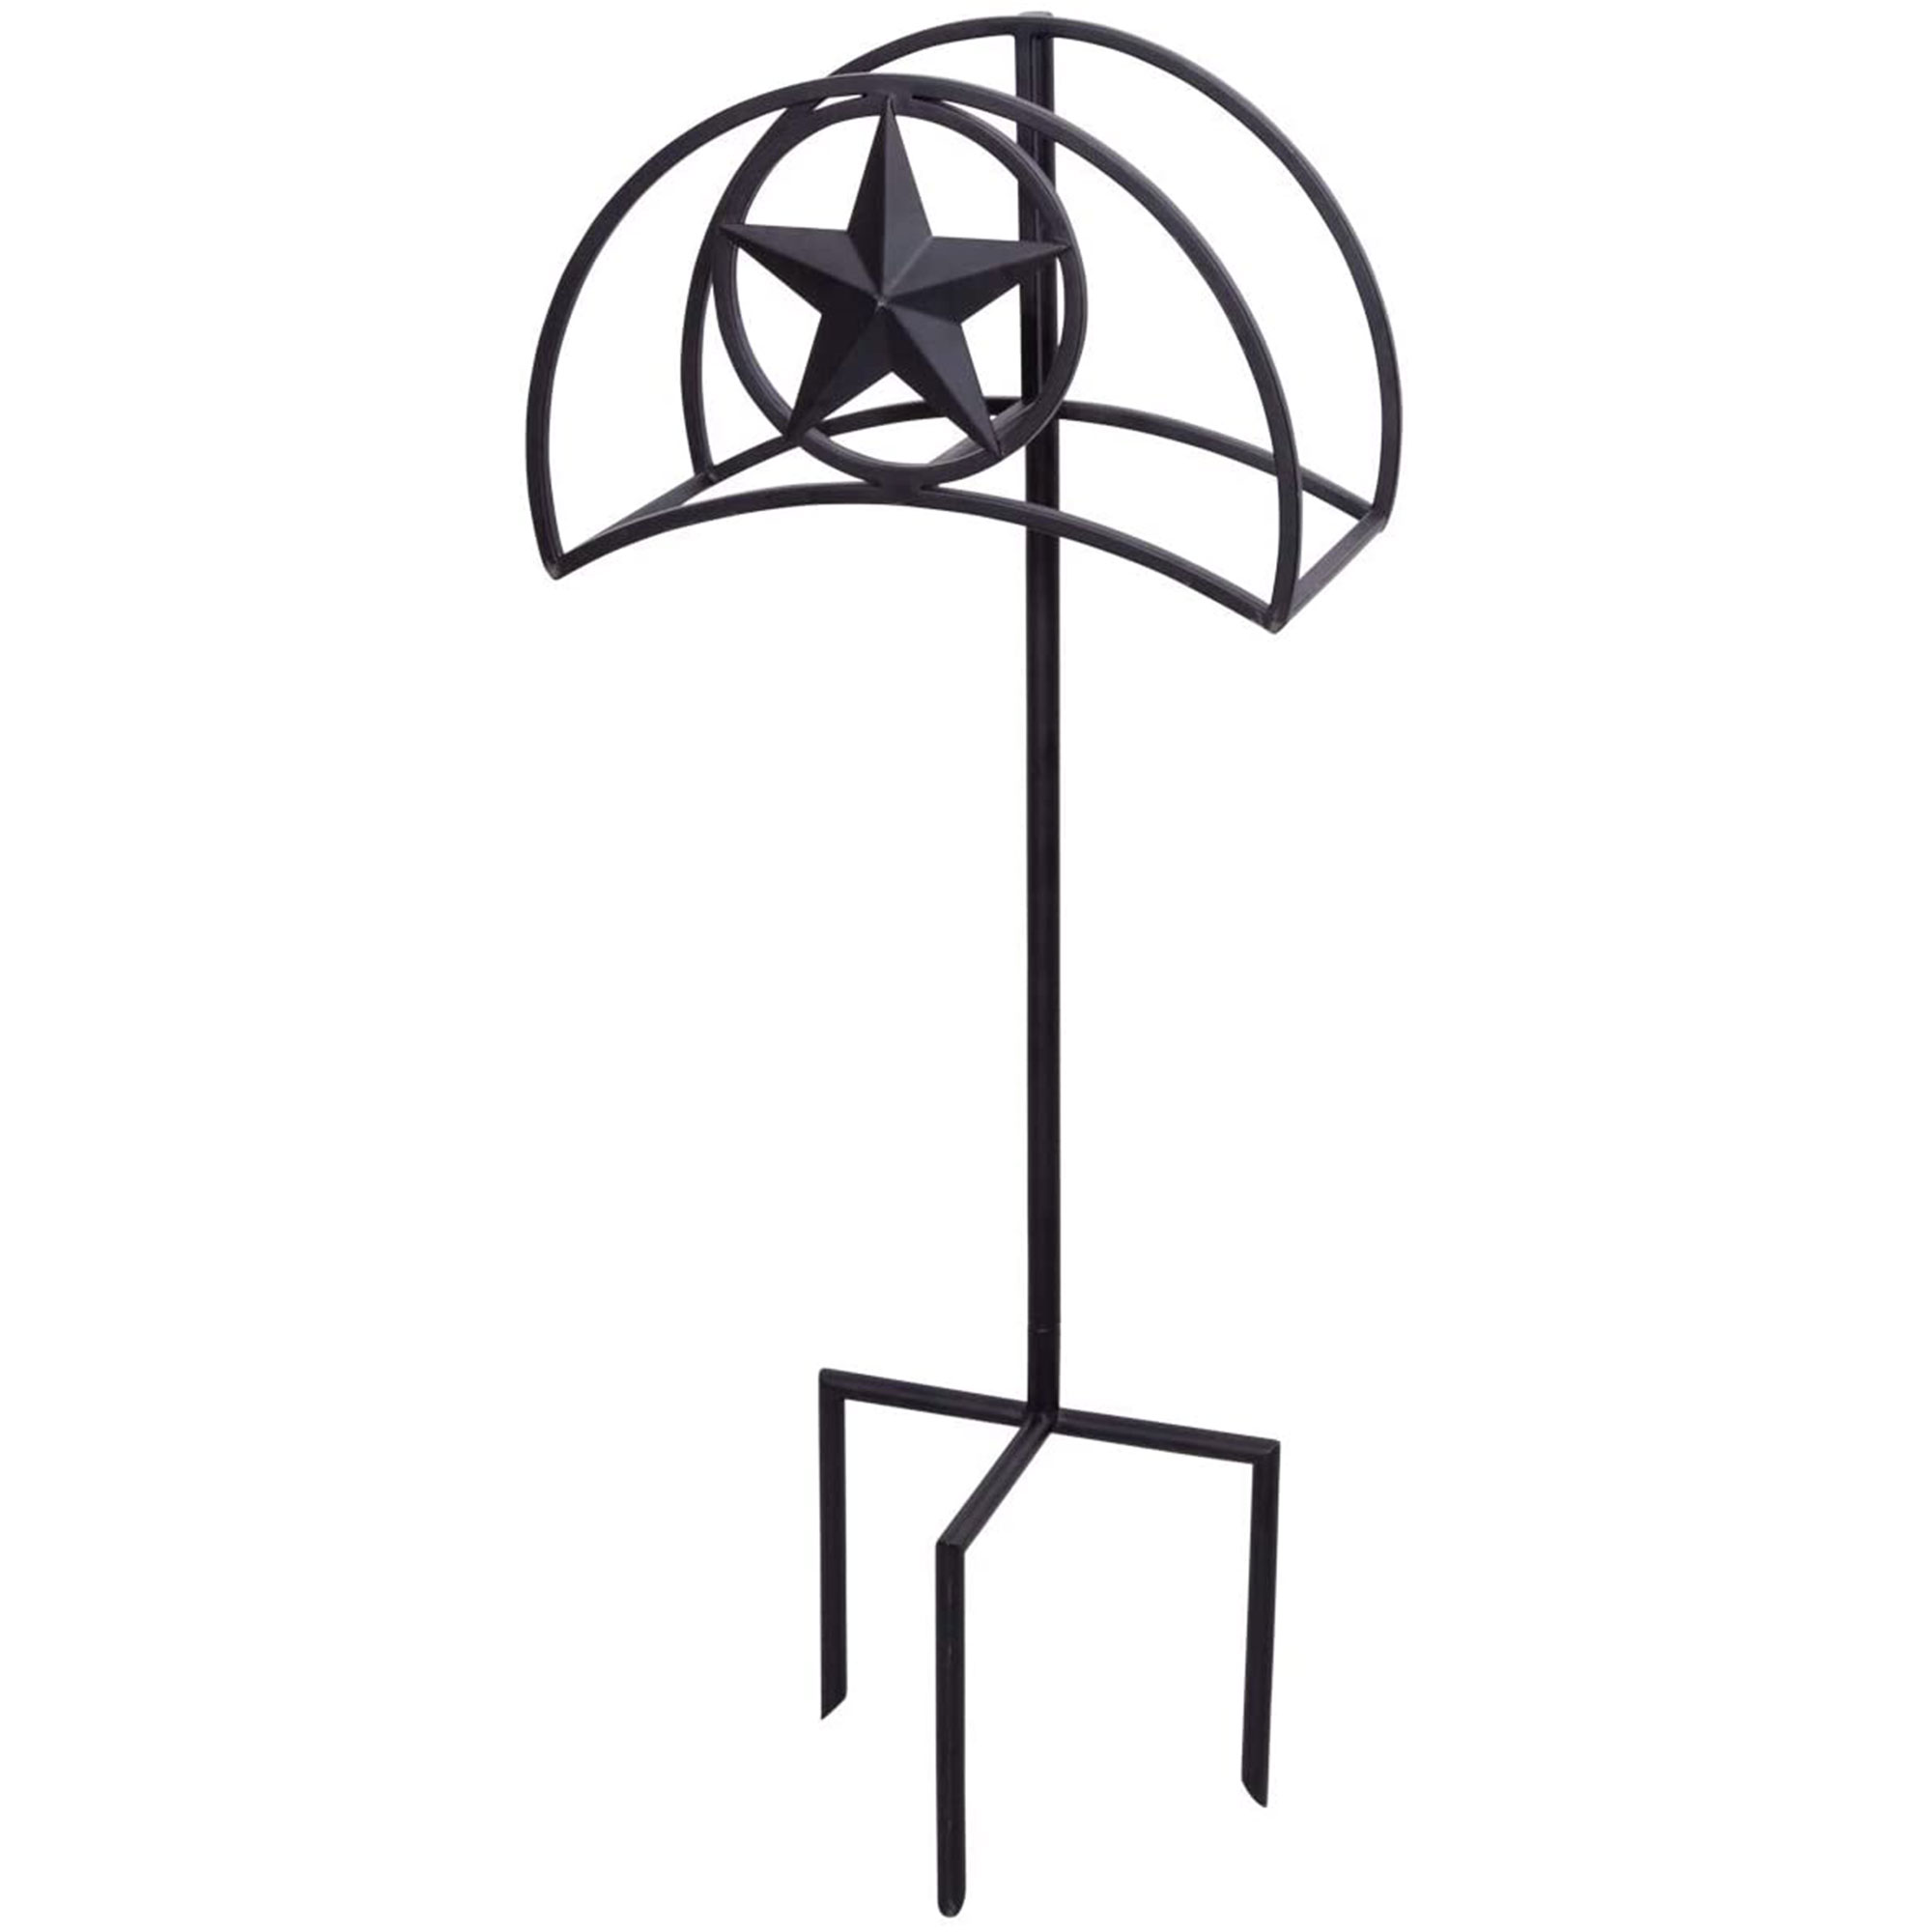 Liberty Garden Outdoor Garden Hose Stand Holder Hanger Star Design, Black - image 1 of 6